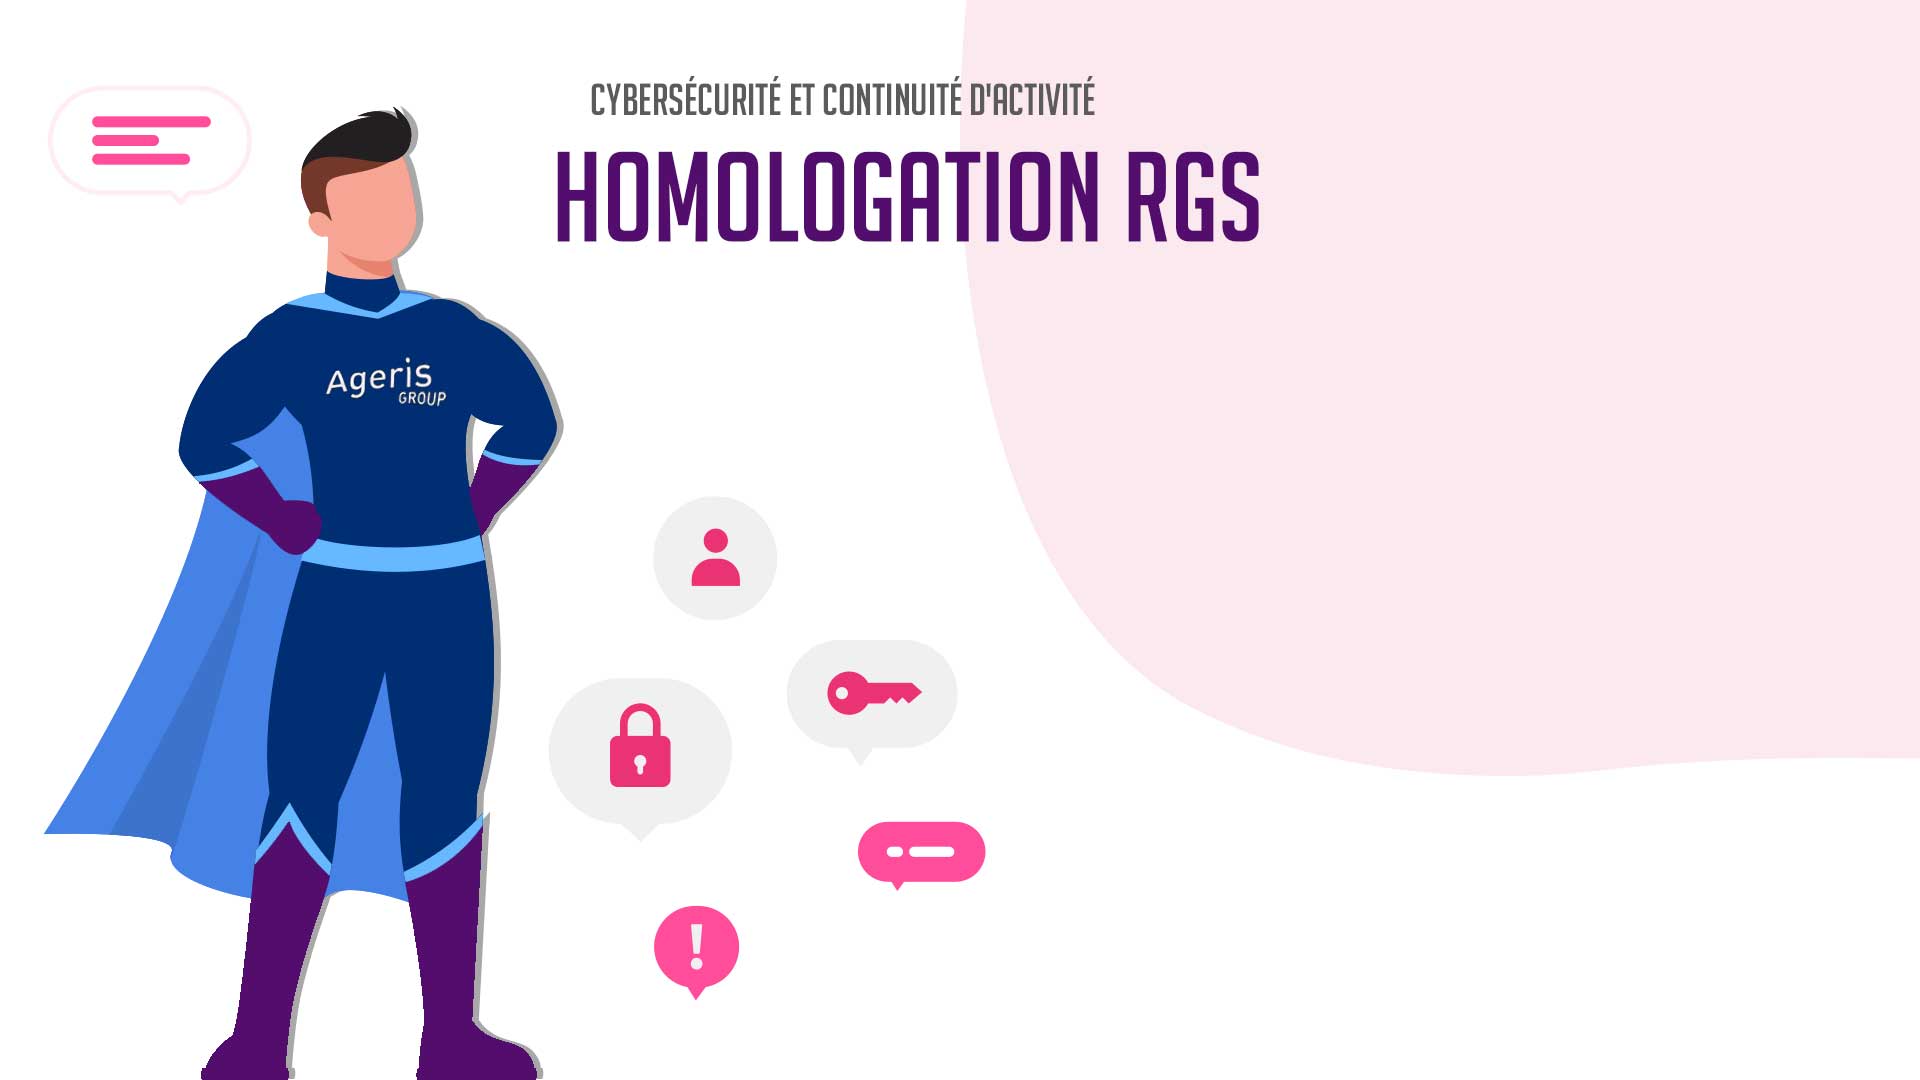 Homologation RGS